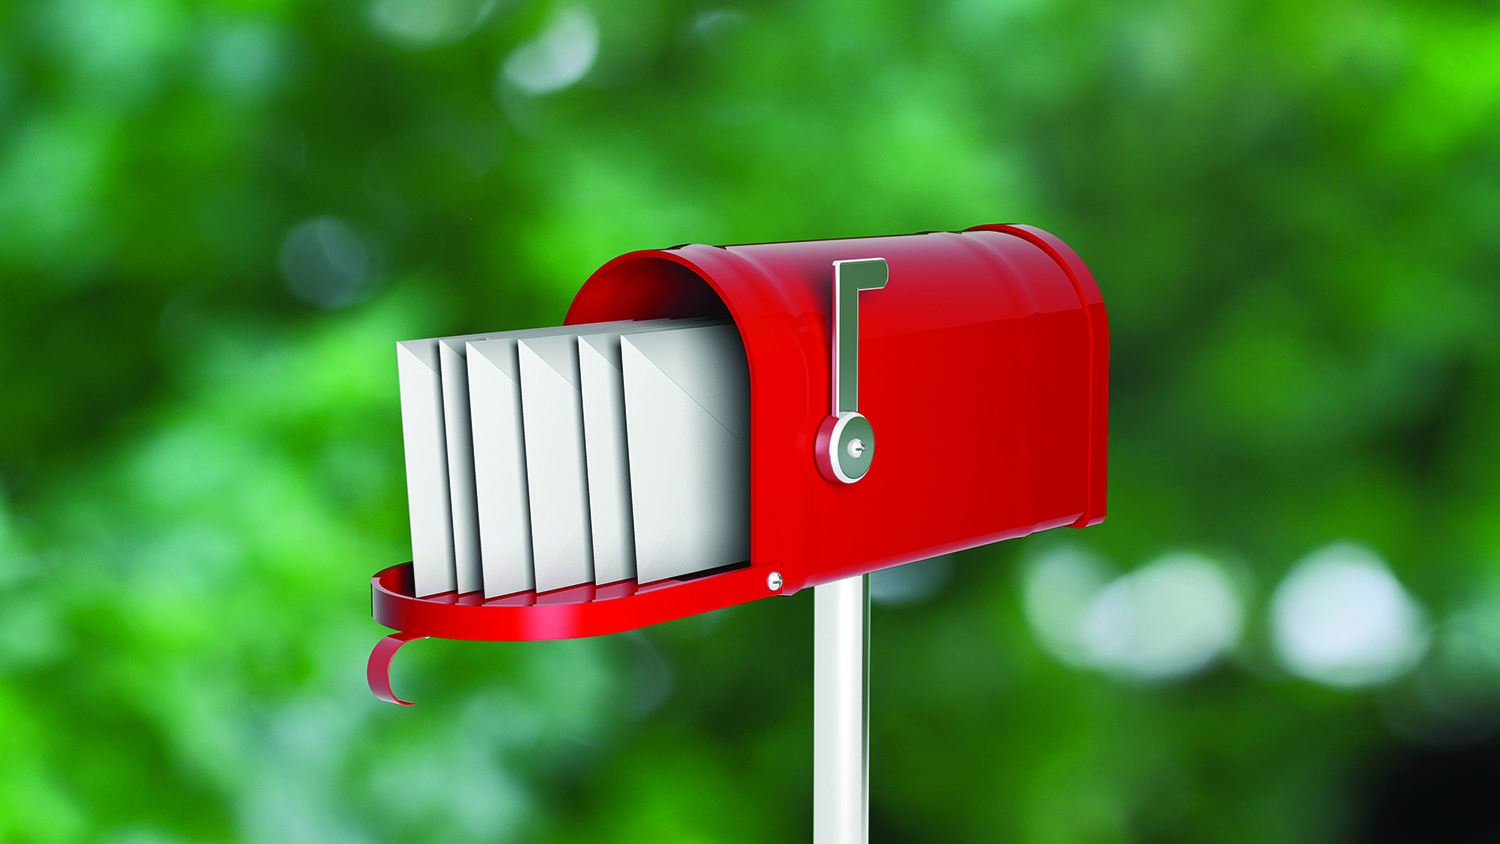 Postal worker injured by trap Florida man set to snare mail-stealing ... - Orlando Sentinel